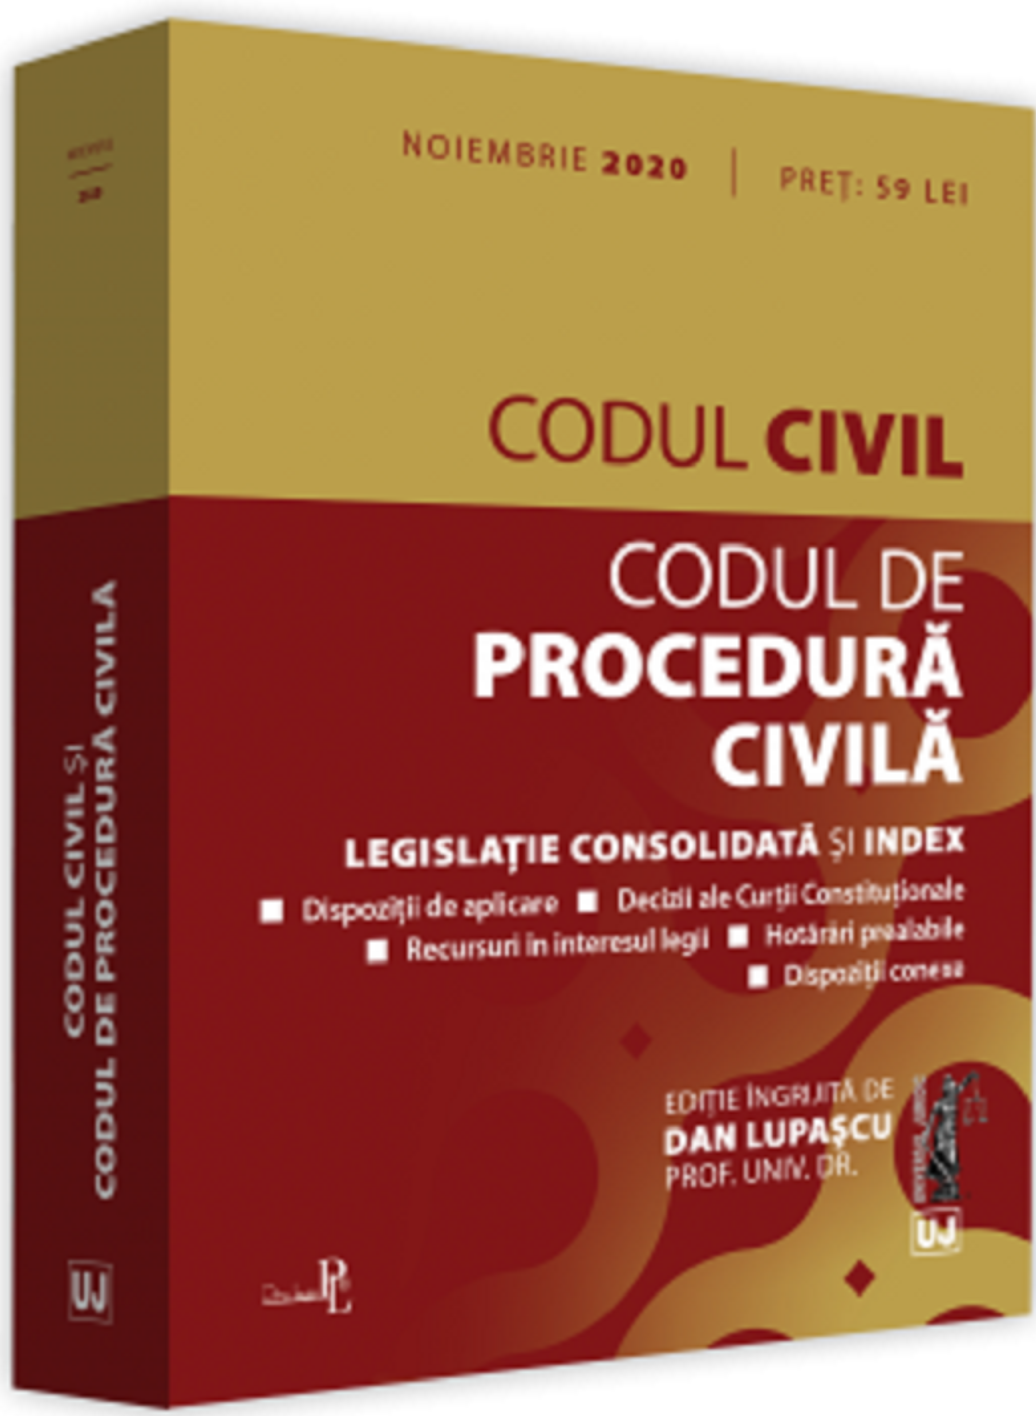 Codul civil si Codul de procedura civila: noiembrie 2020 | Dan Lupascu